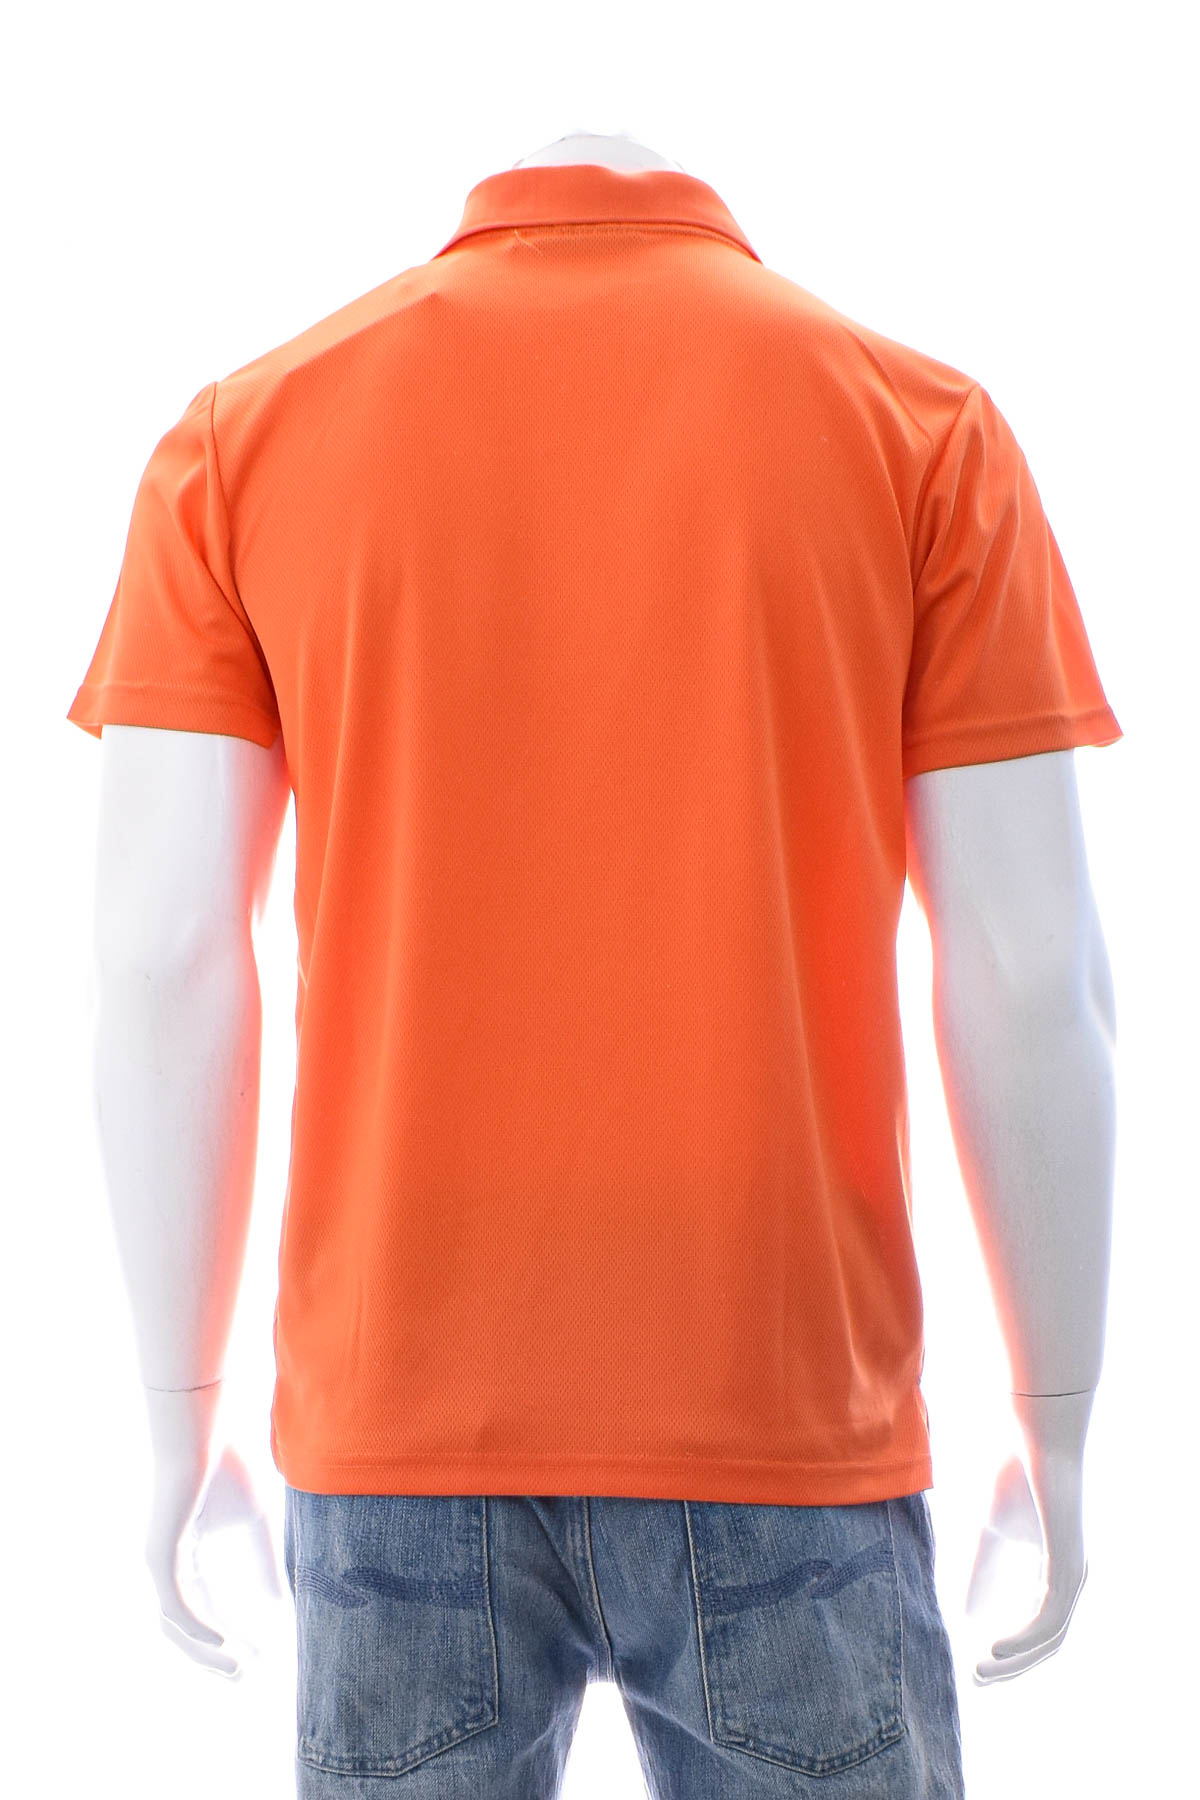 Men's T-shirt - Coastline - 1